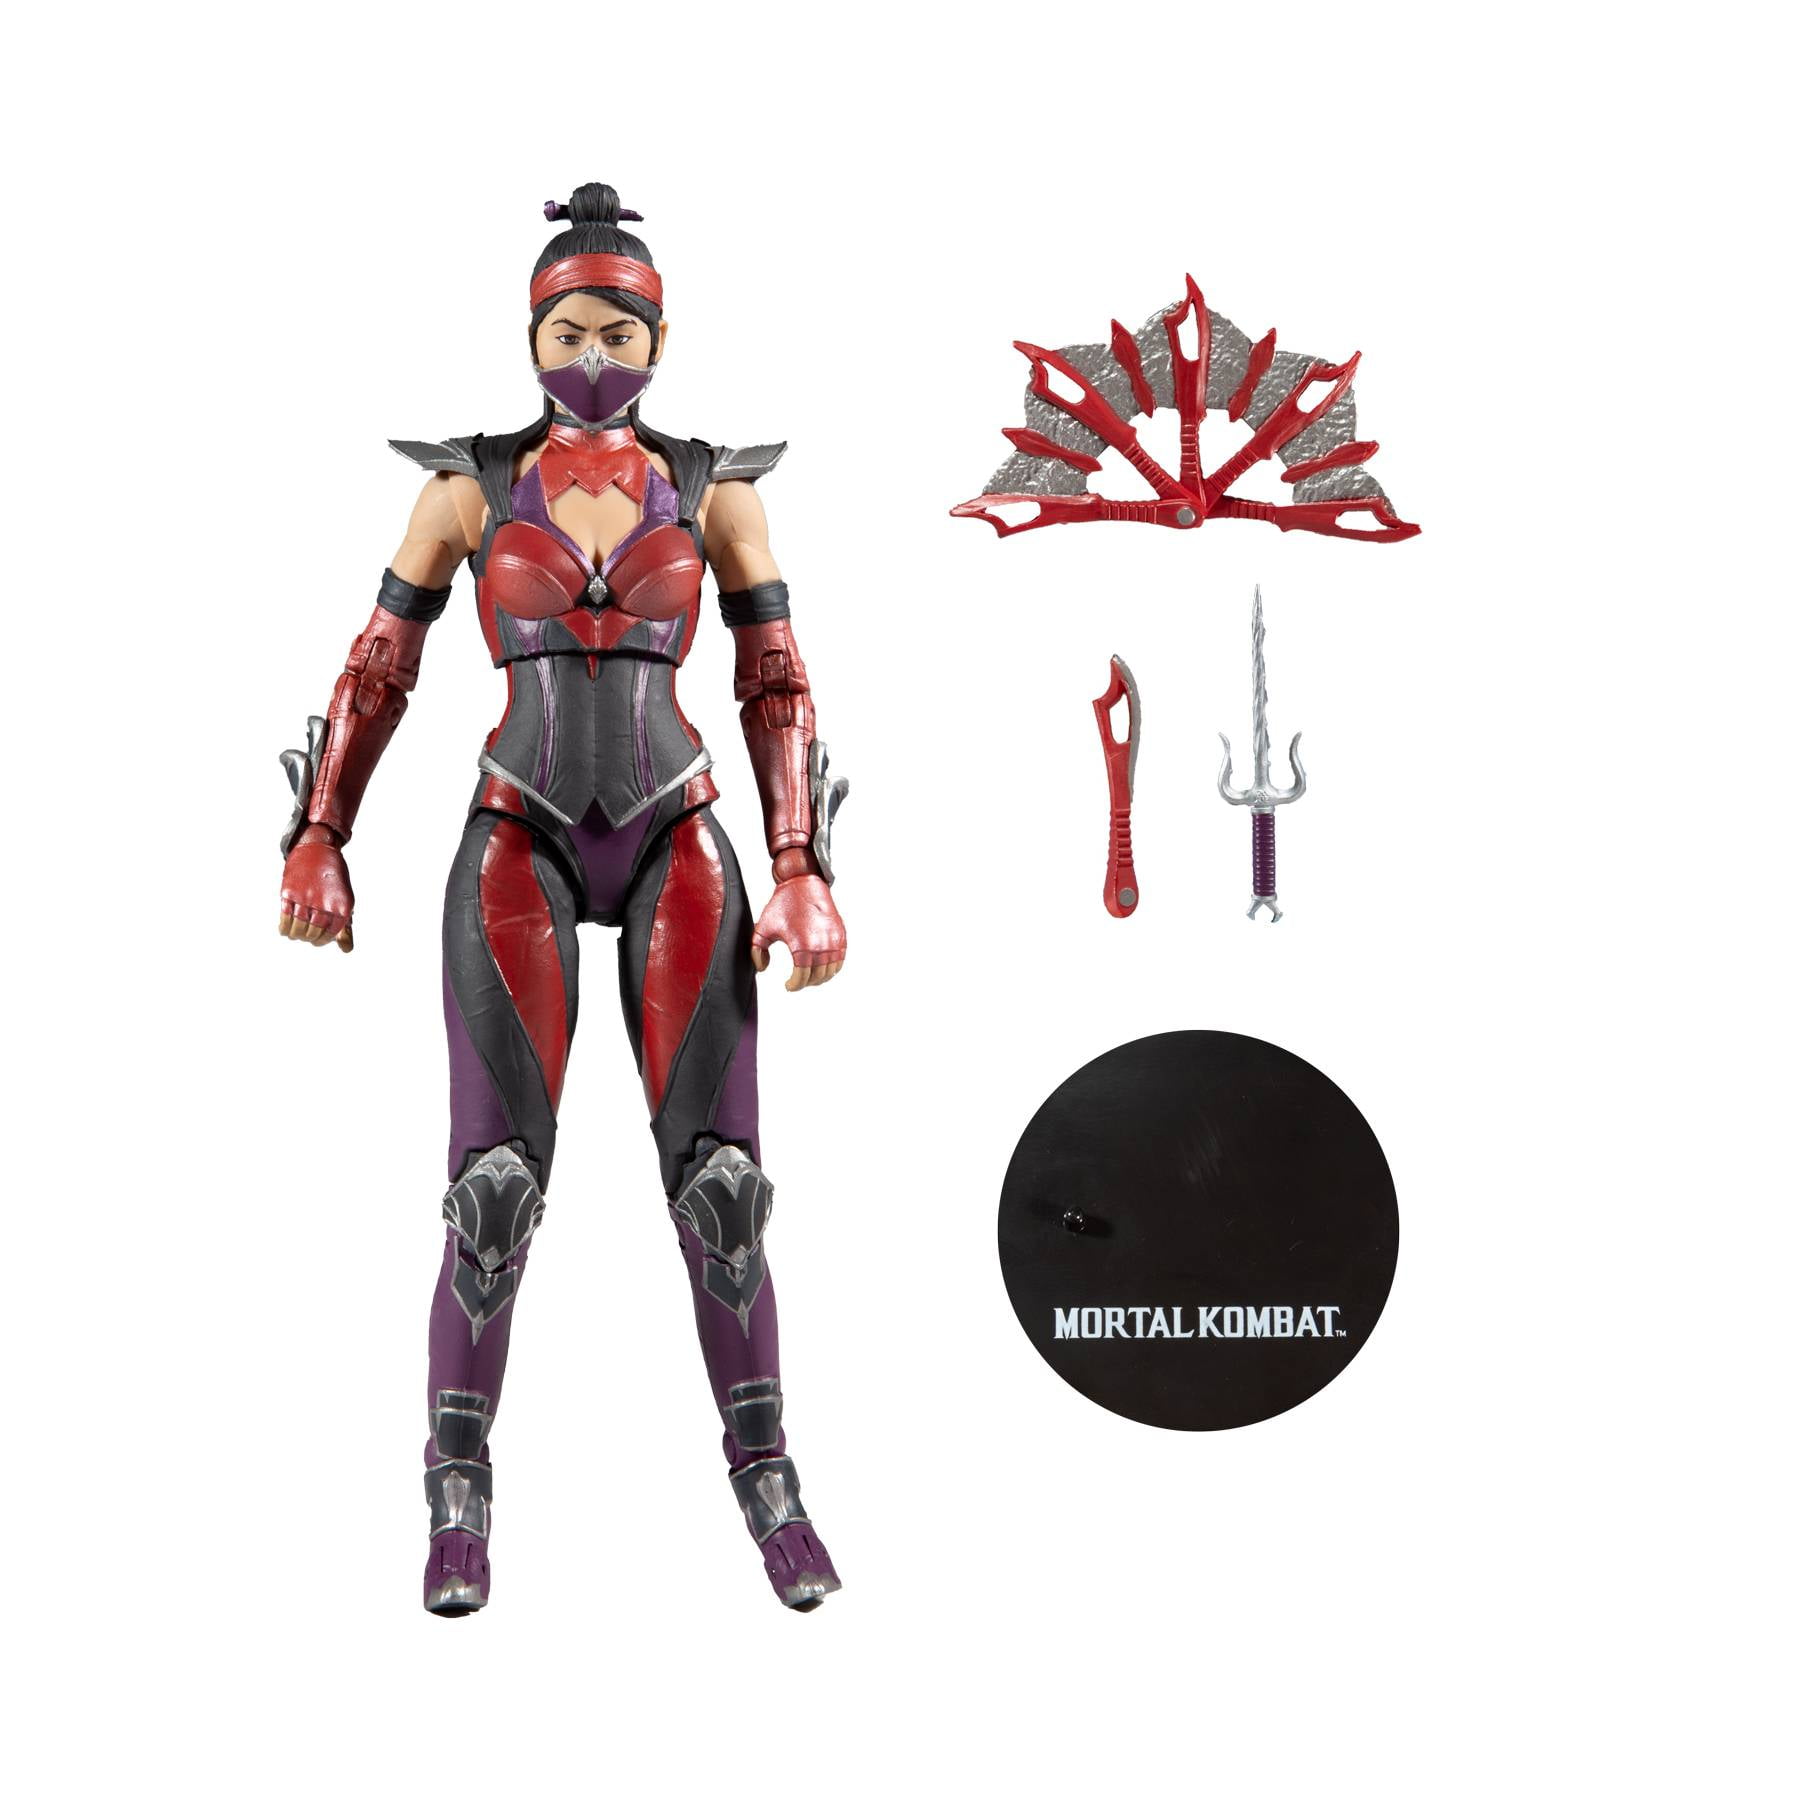 2021 McFarlane Toys Mortal Kombat Limited Walmart Figure Kitana Battle Kahnun for sale online 